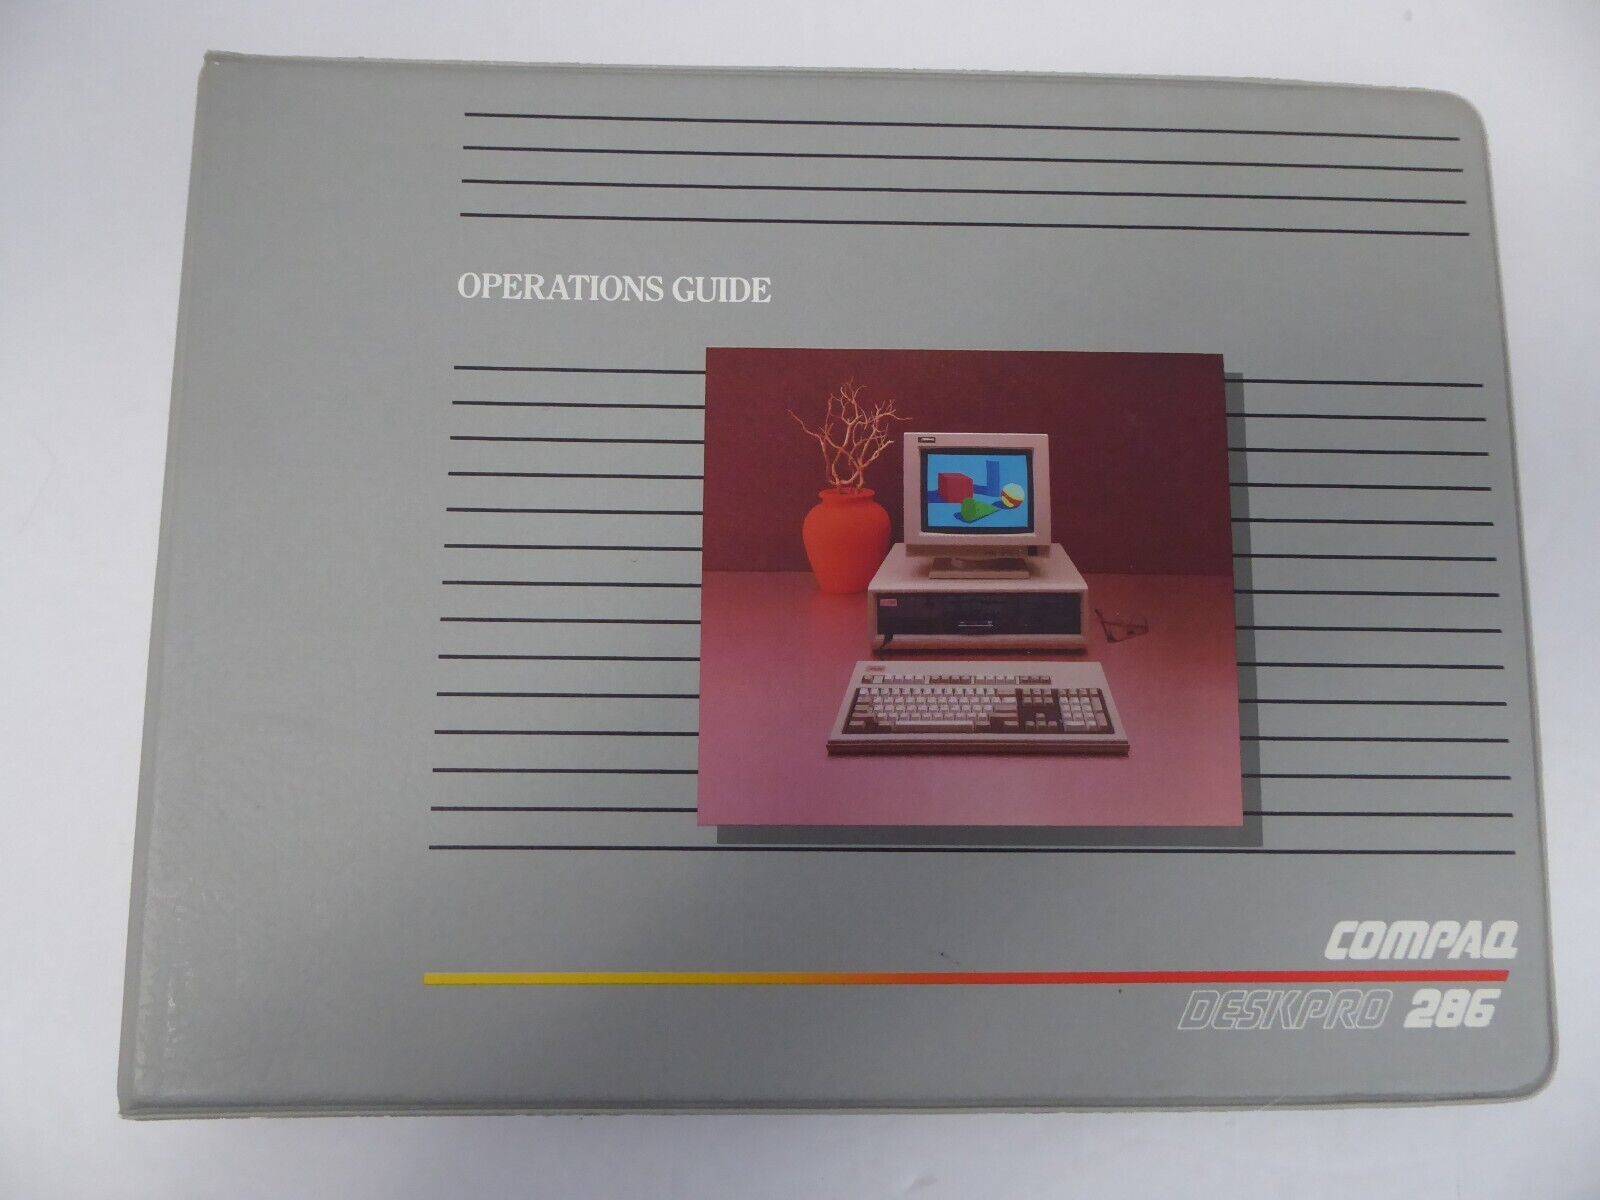 Compaq Deskpro 286 Operations Guide